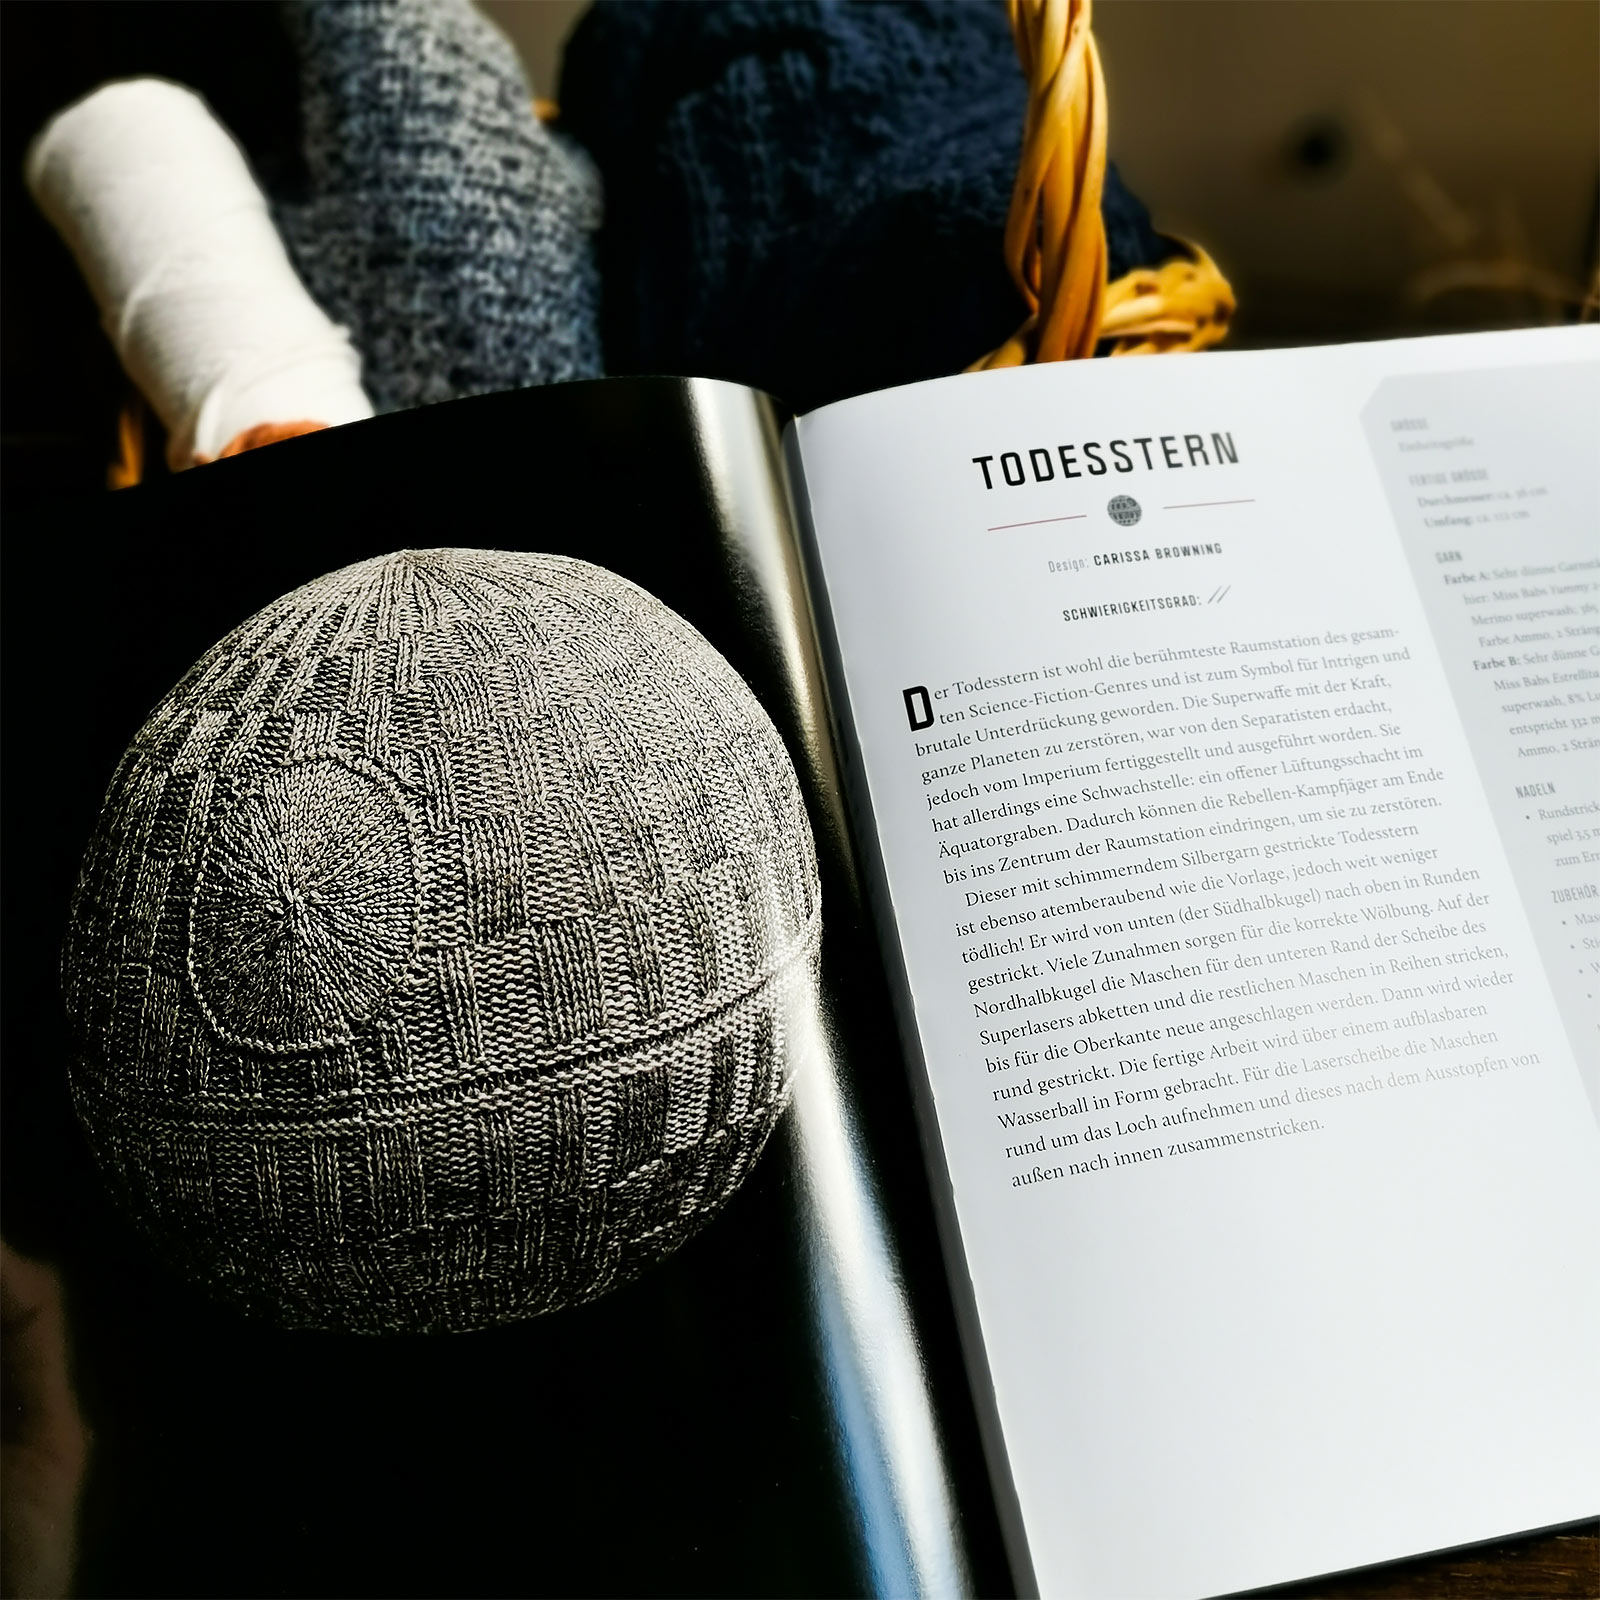 Star Wars - Galactic Knitting